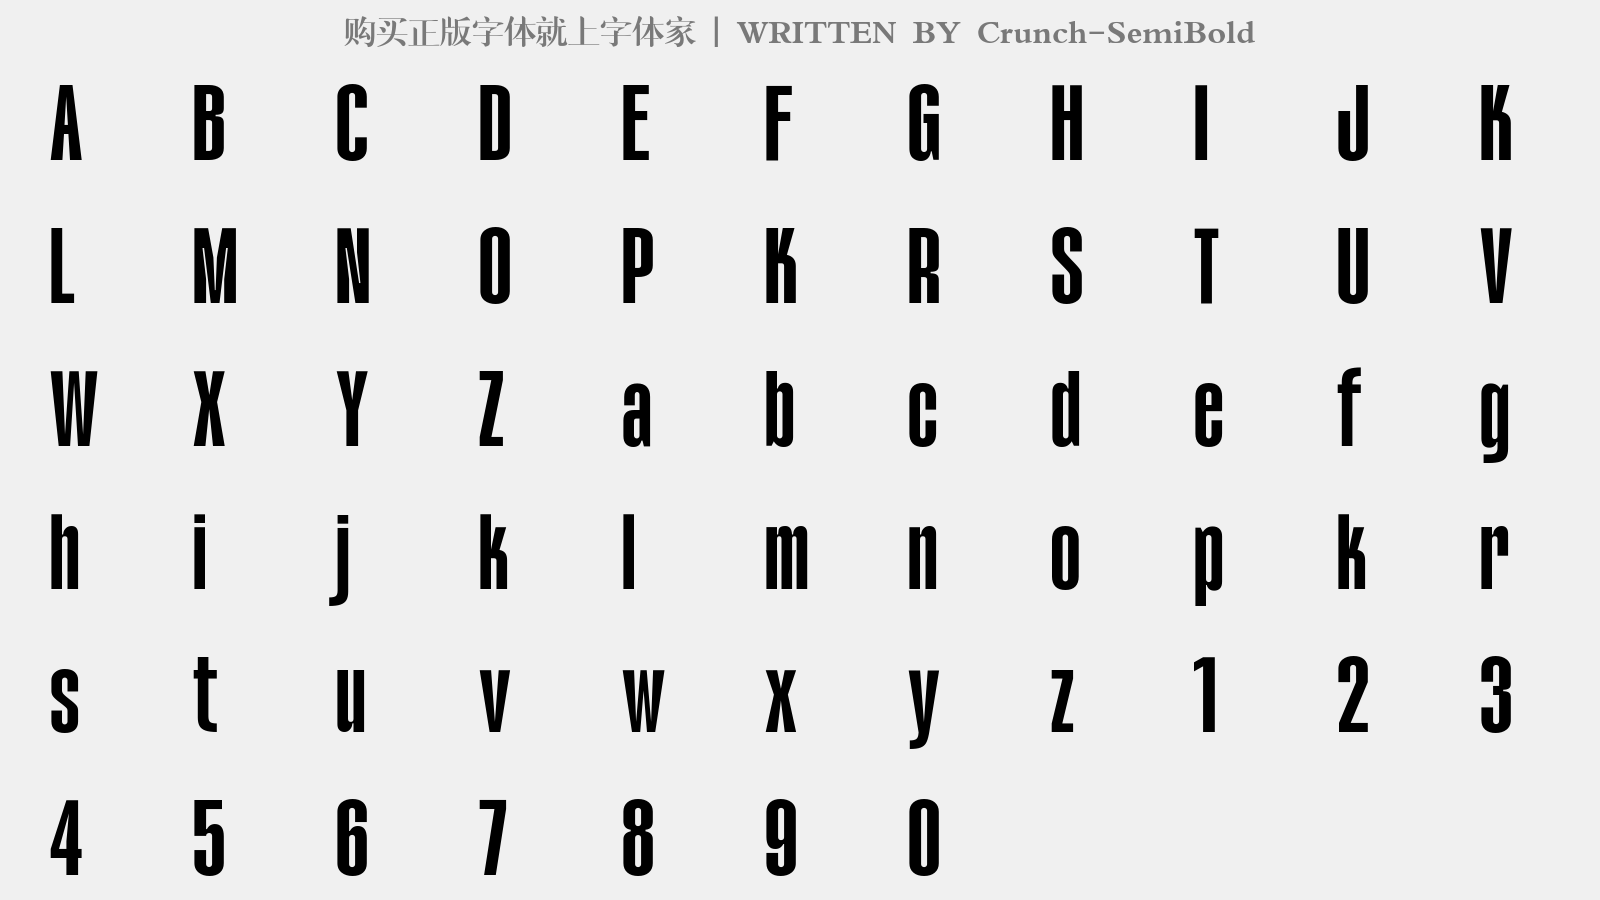 Crunch-SemiBold - 大写字母/小写字母/数字